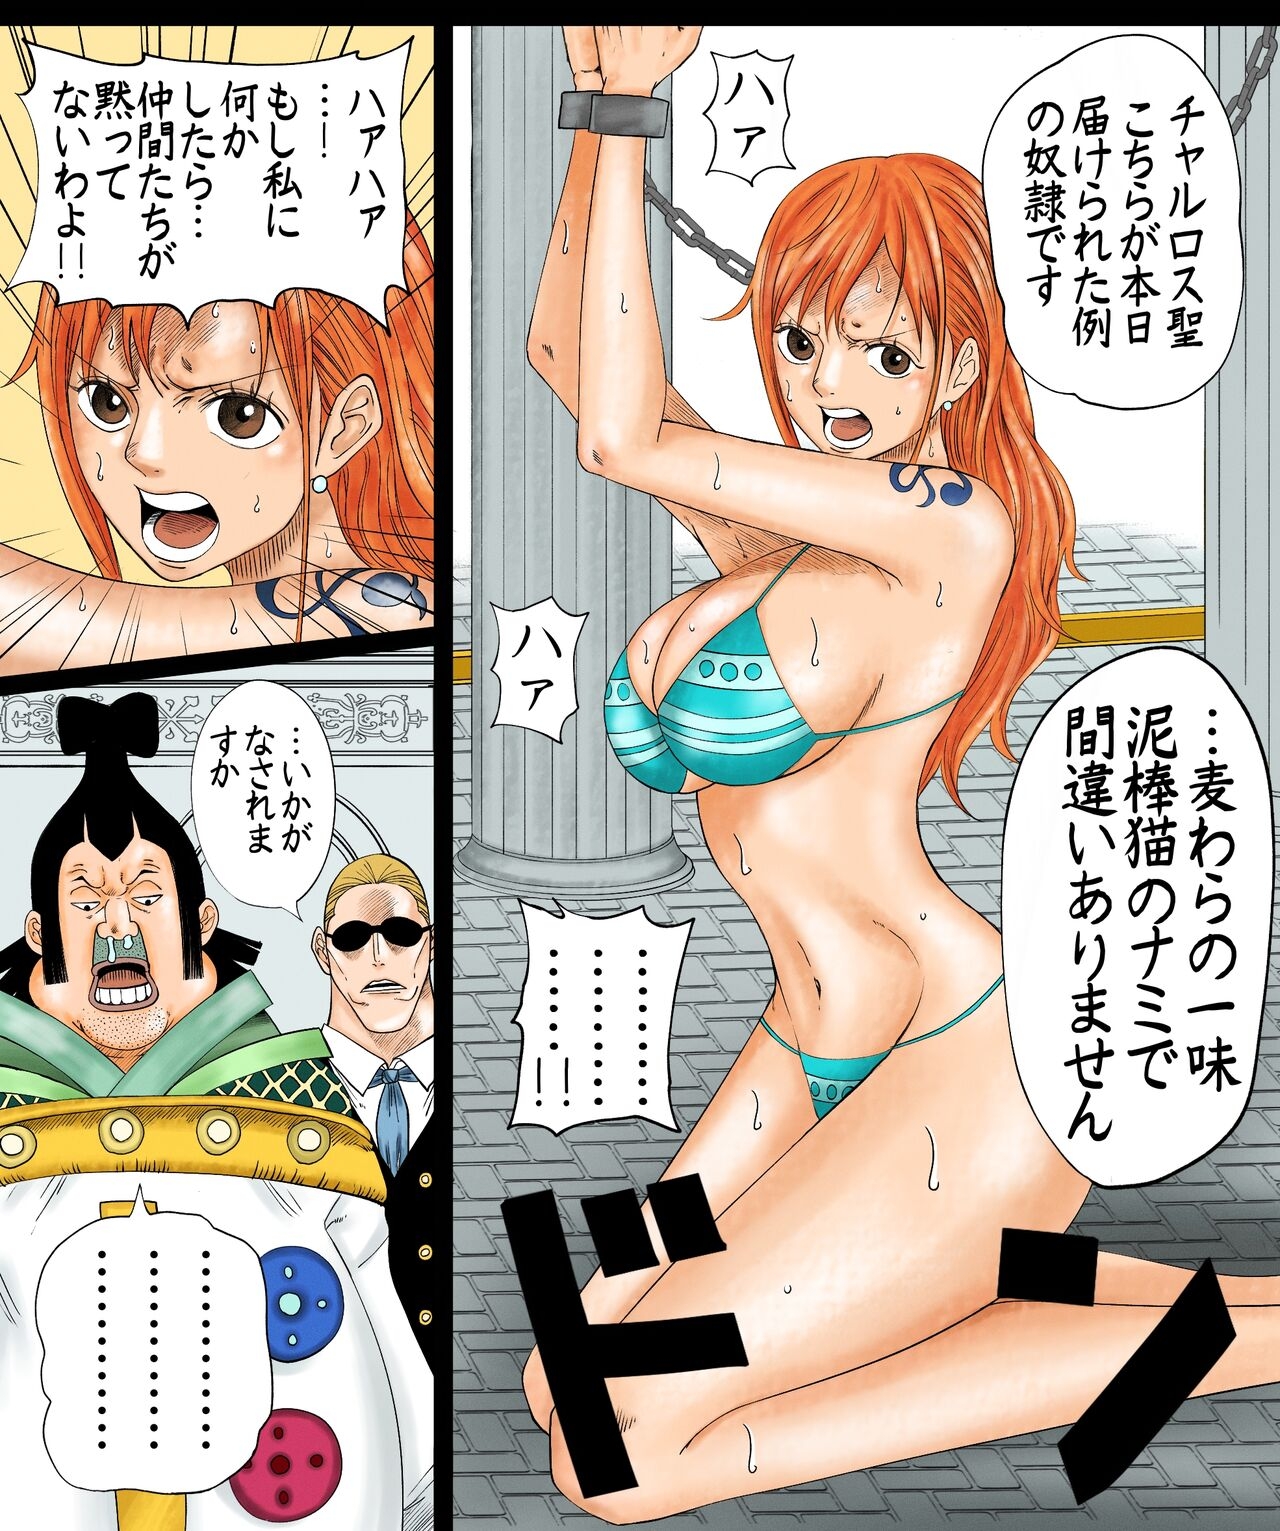 One piece nude manga